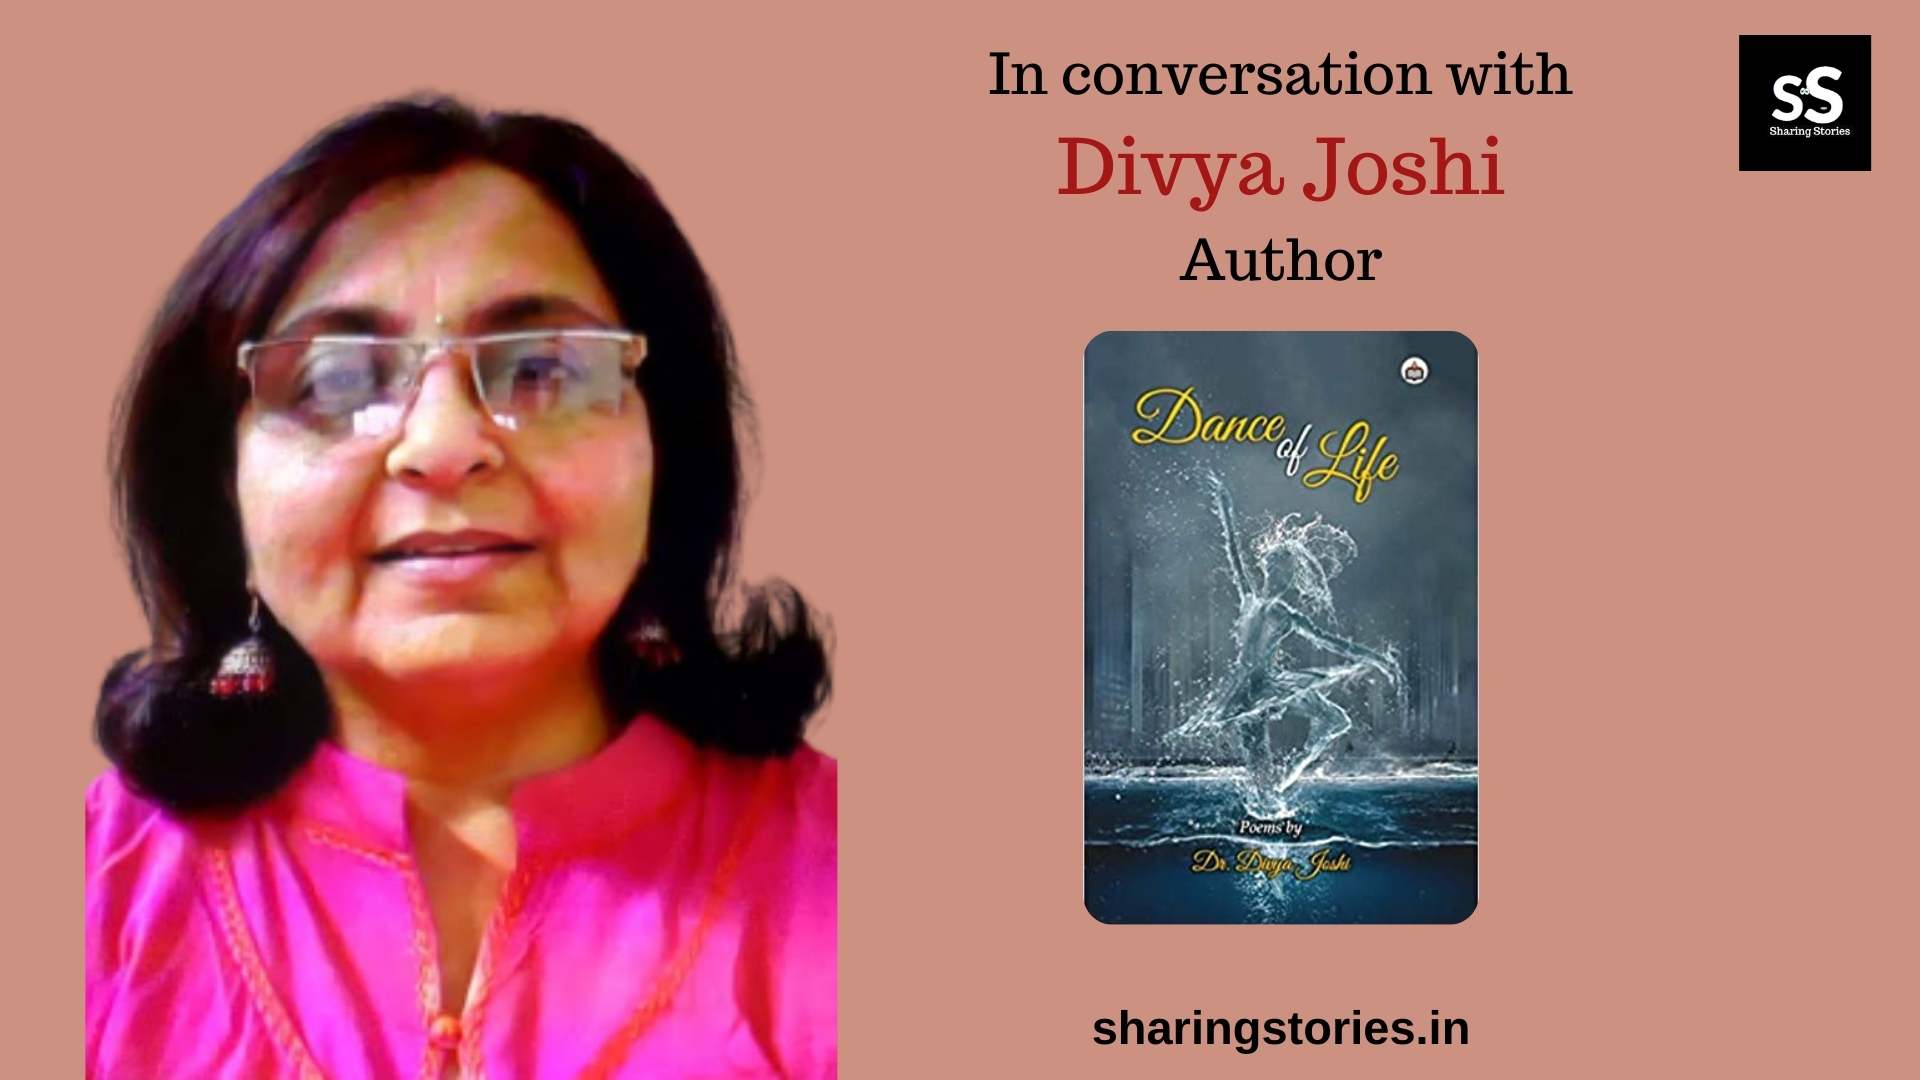 Author Divya Joshi